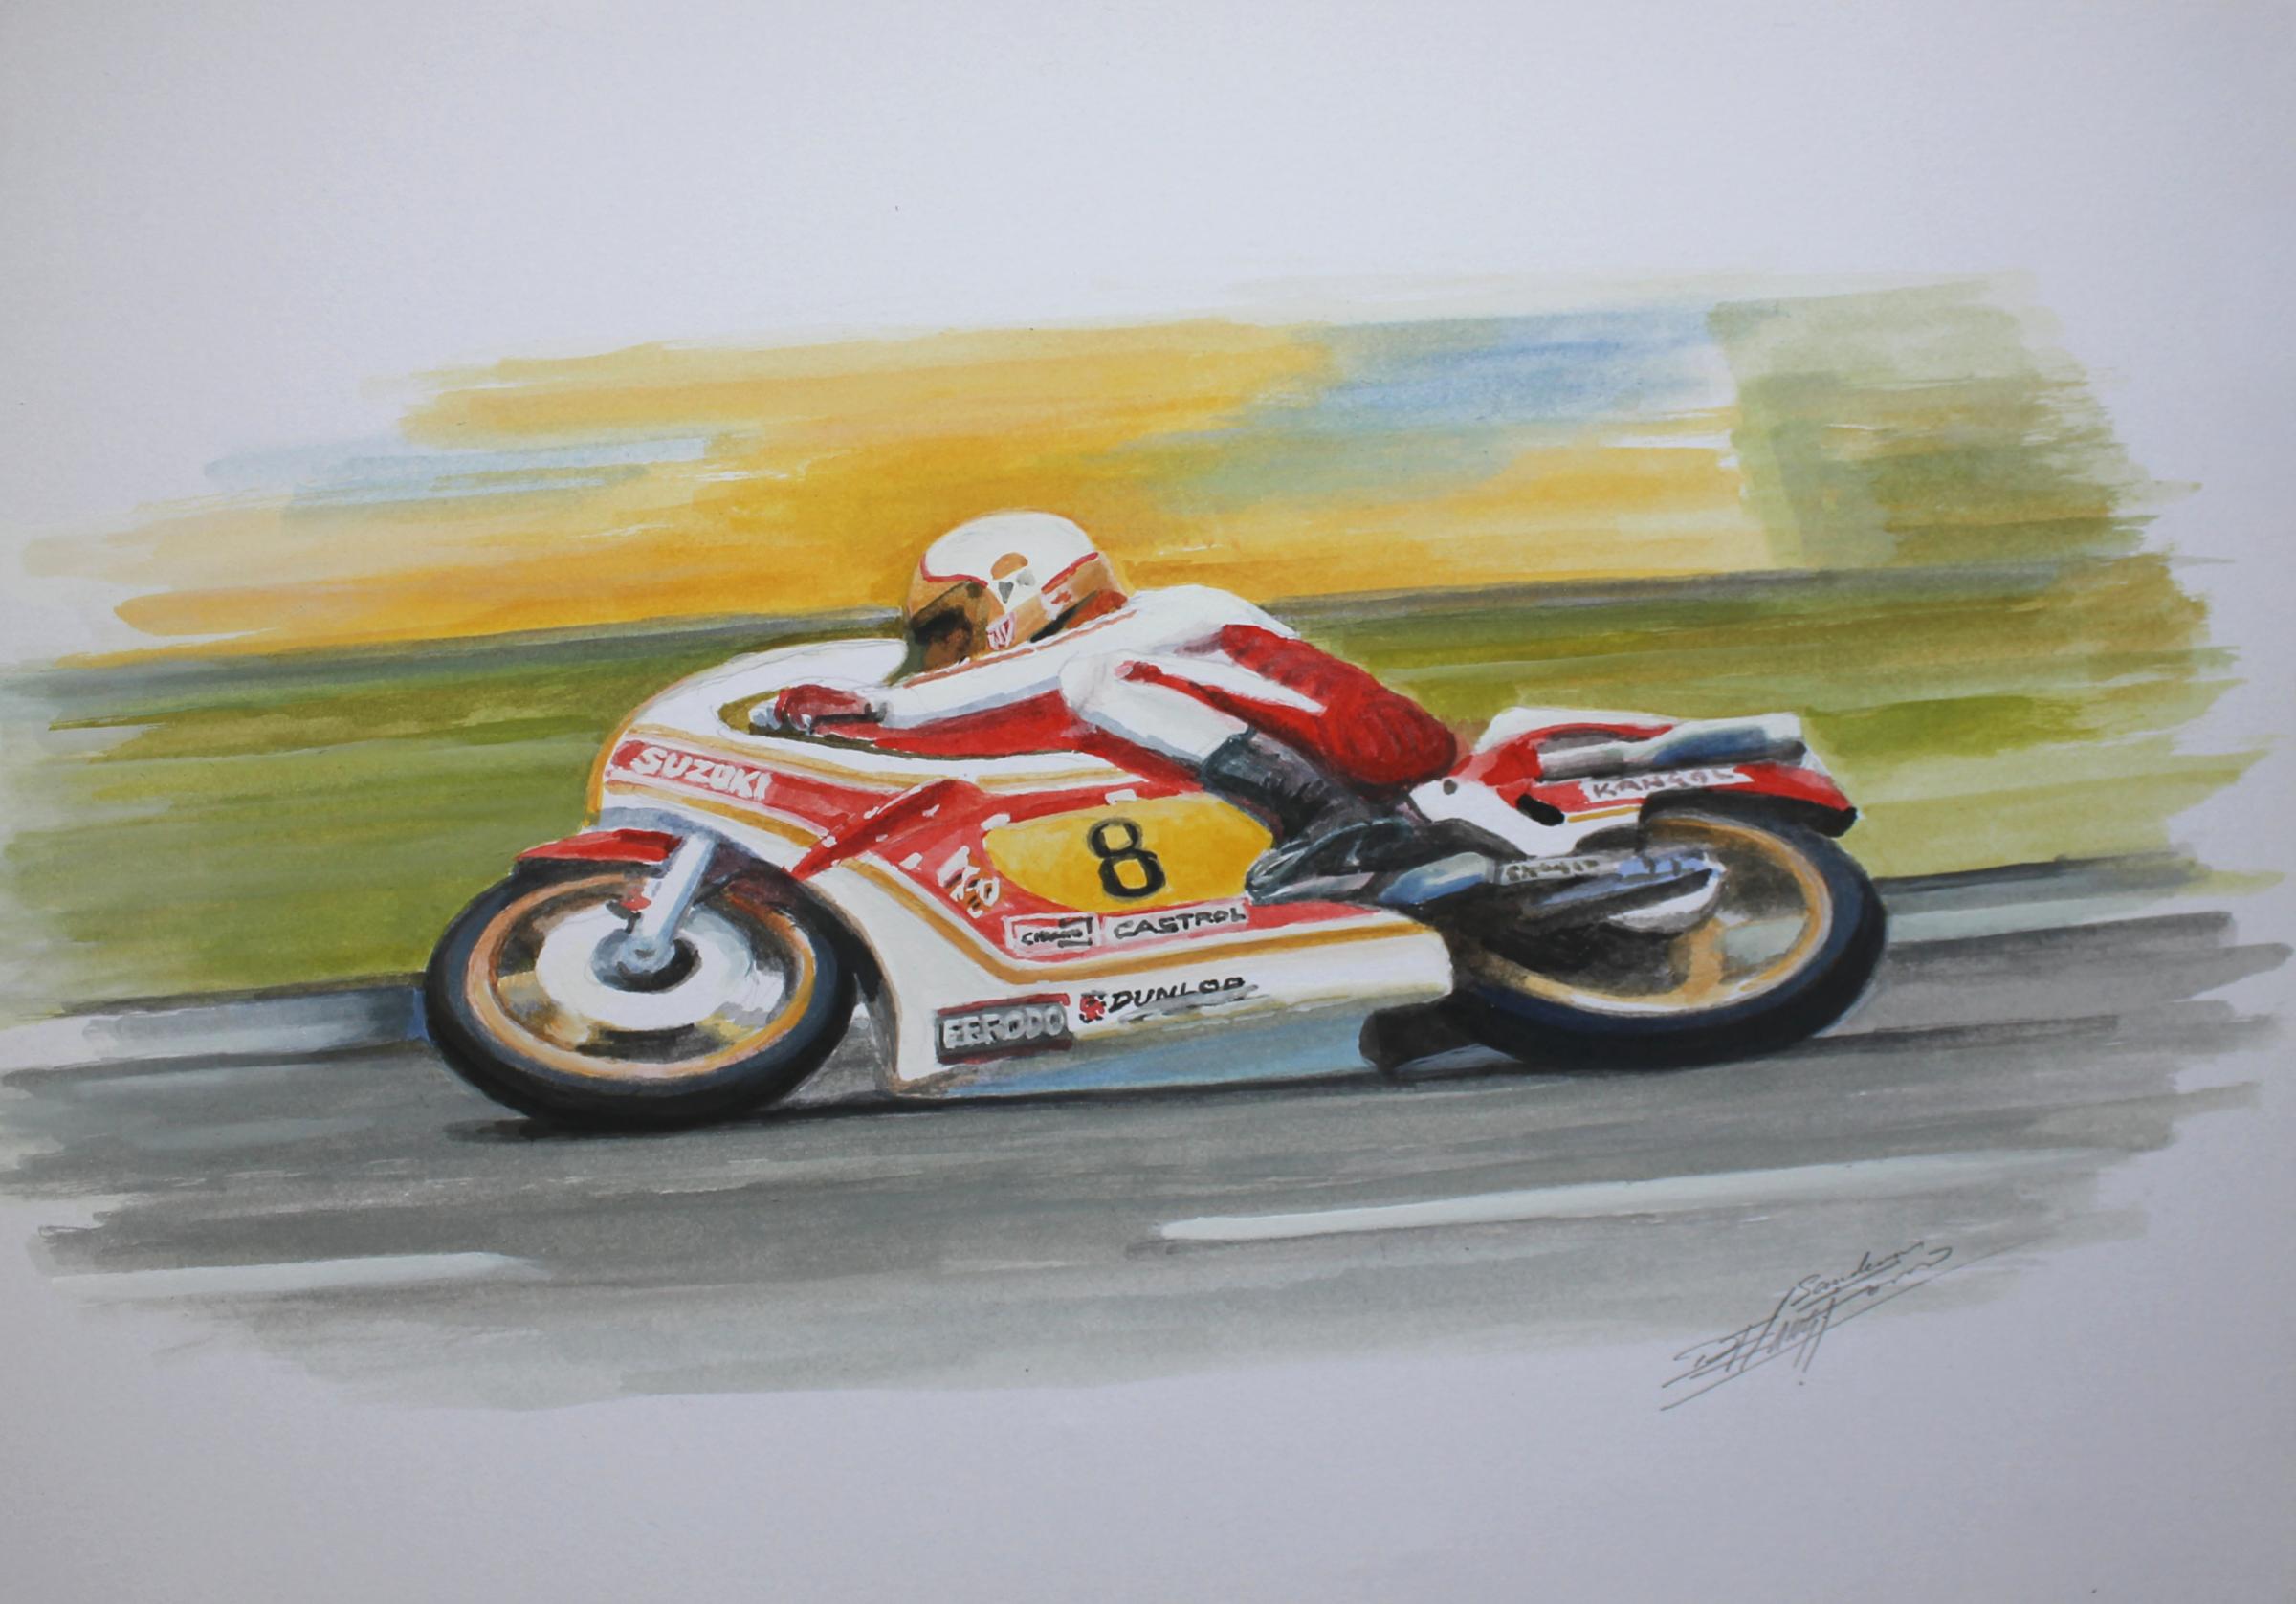 David Langford’s painting of Mike Hailwood winning his final Isle of Man TT race in 1979